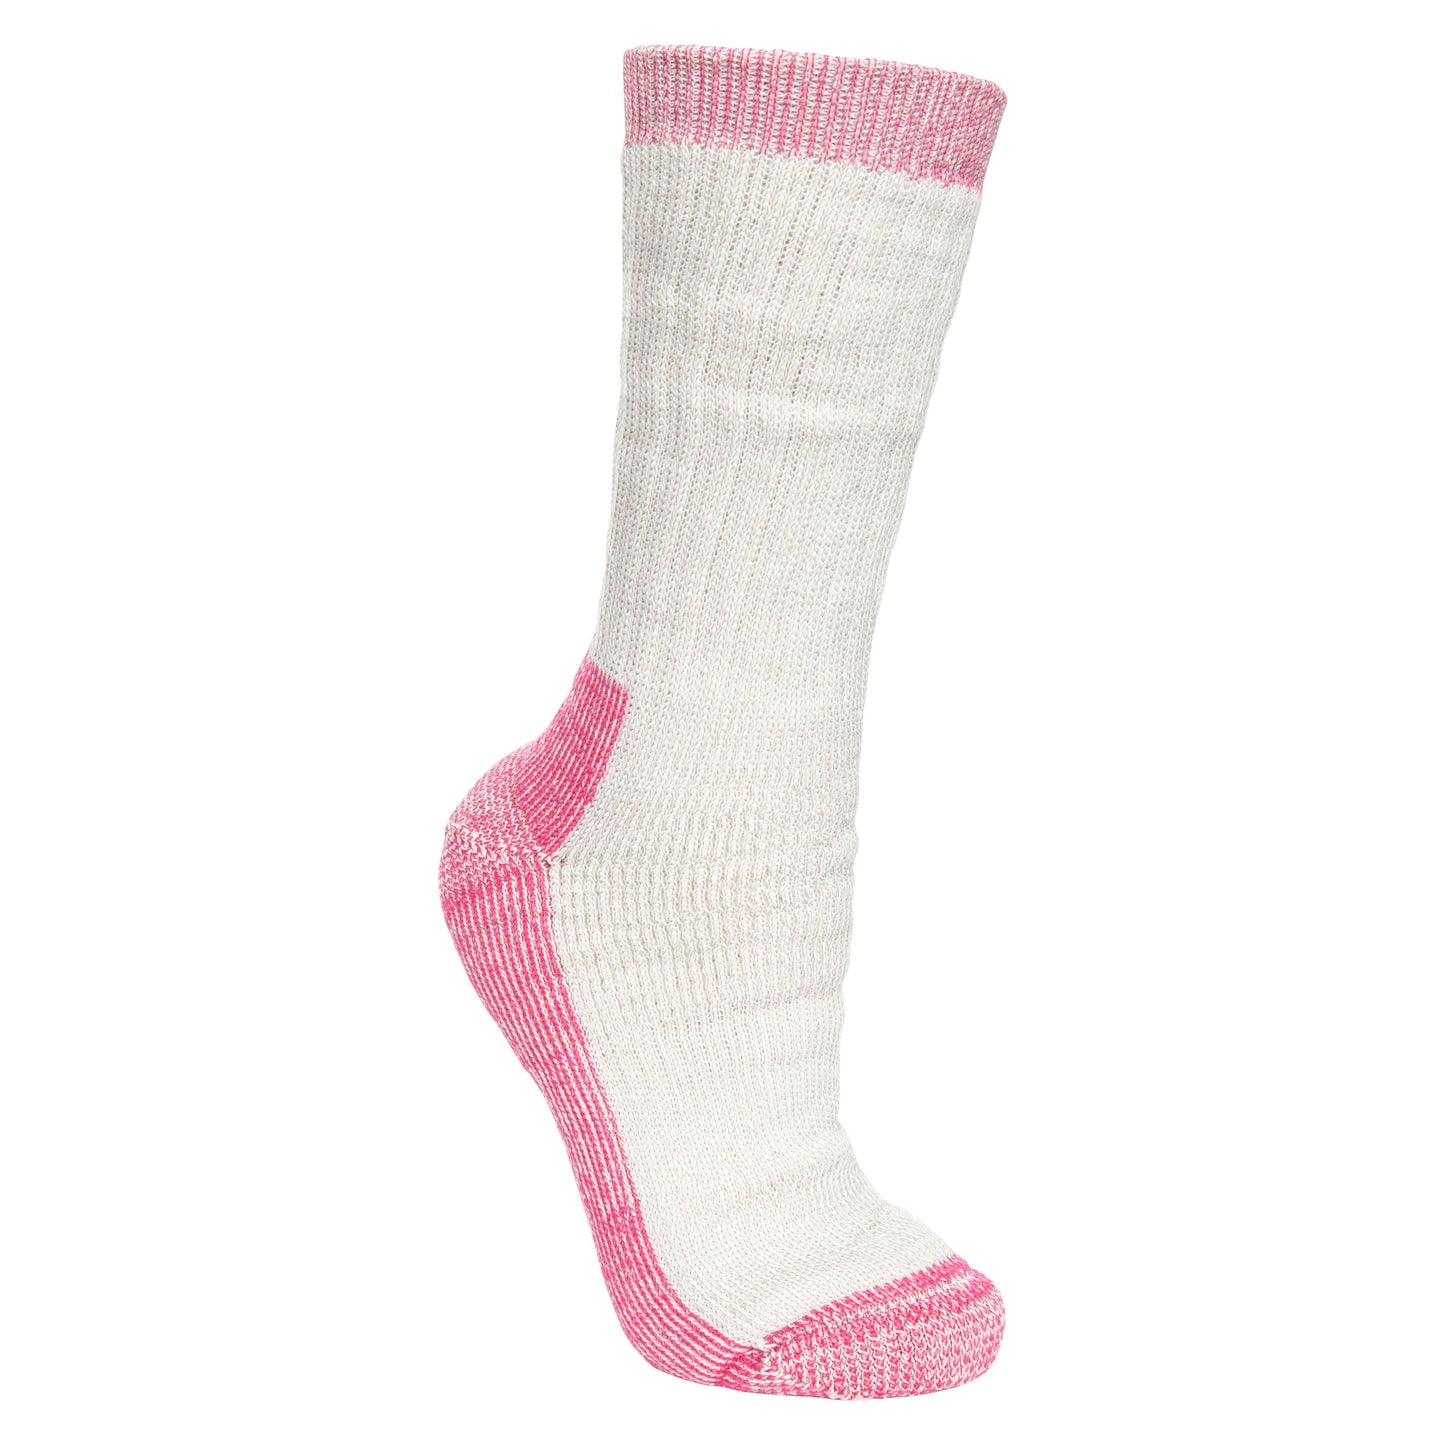 Dlx Women's Springing Walking Socks